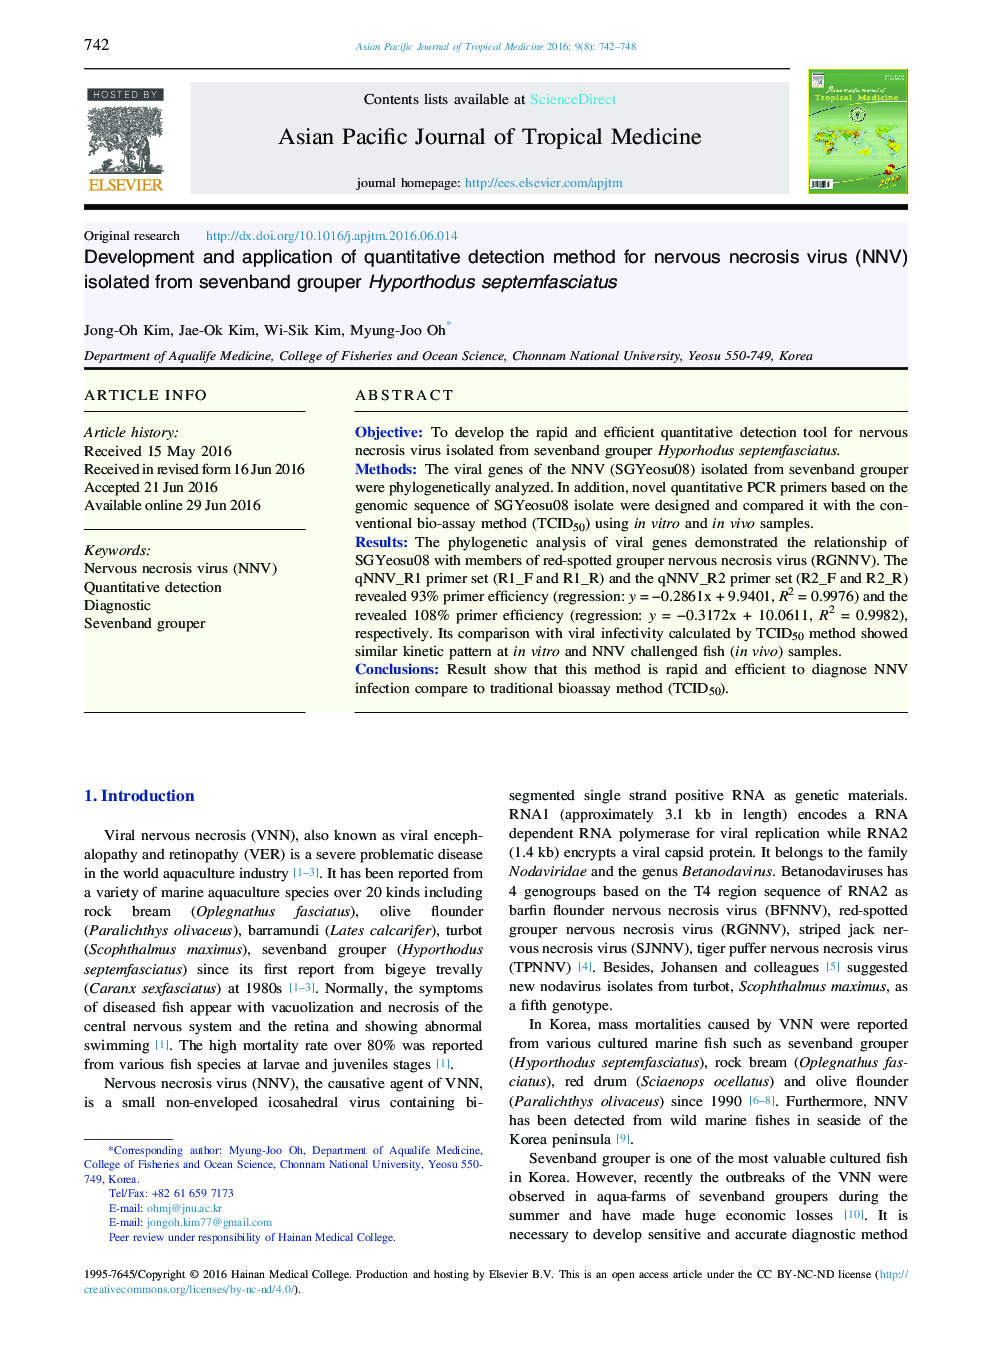 Development and application of quantitative detection method for nervous necrosis virus (NNV) isolated from sevenband grouper Hyporthodus septemfasciatus 